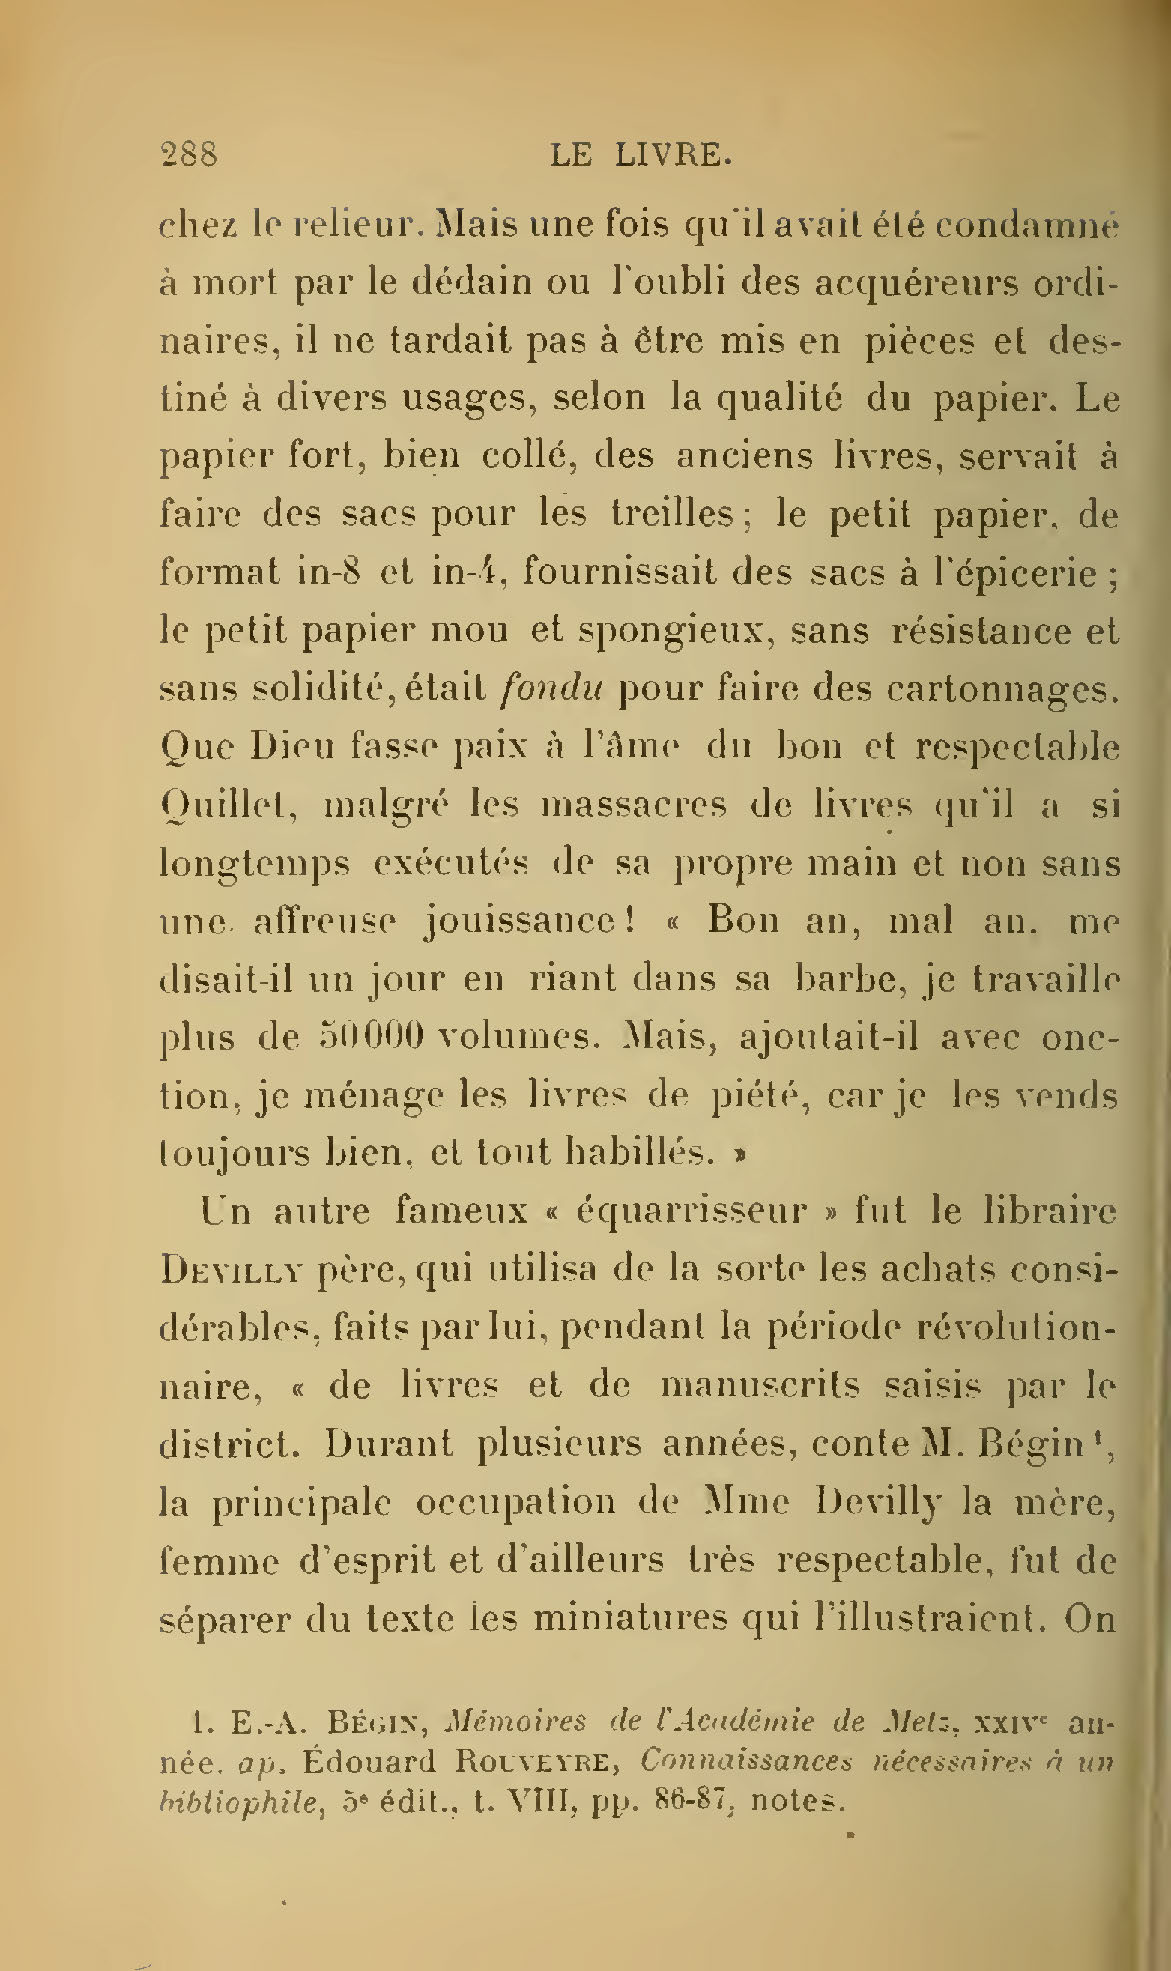 Albert Cim, Le Livre, t. II, p. 288.